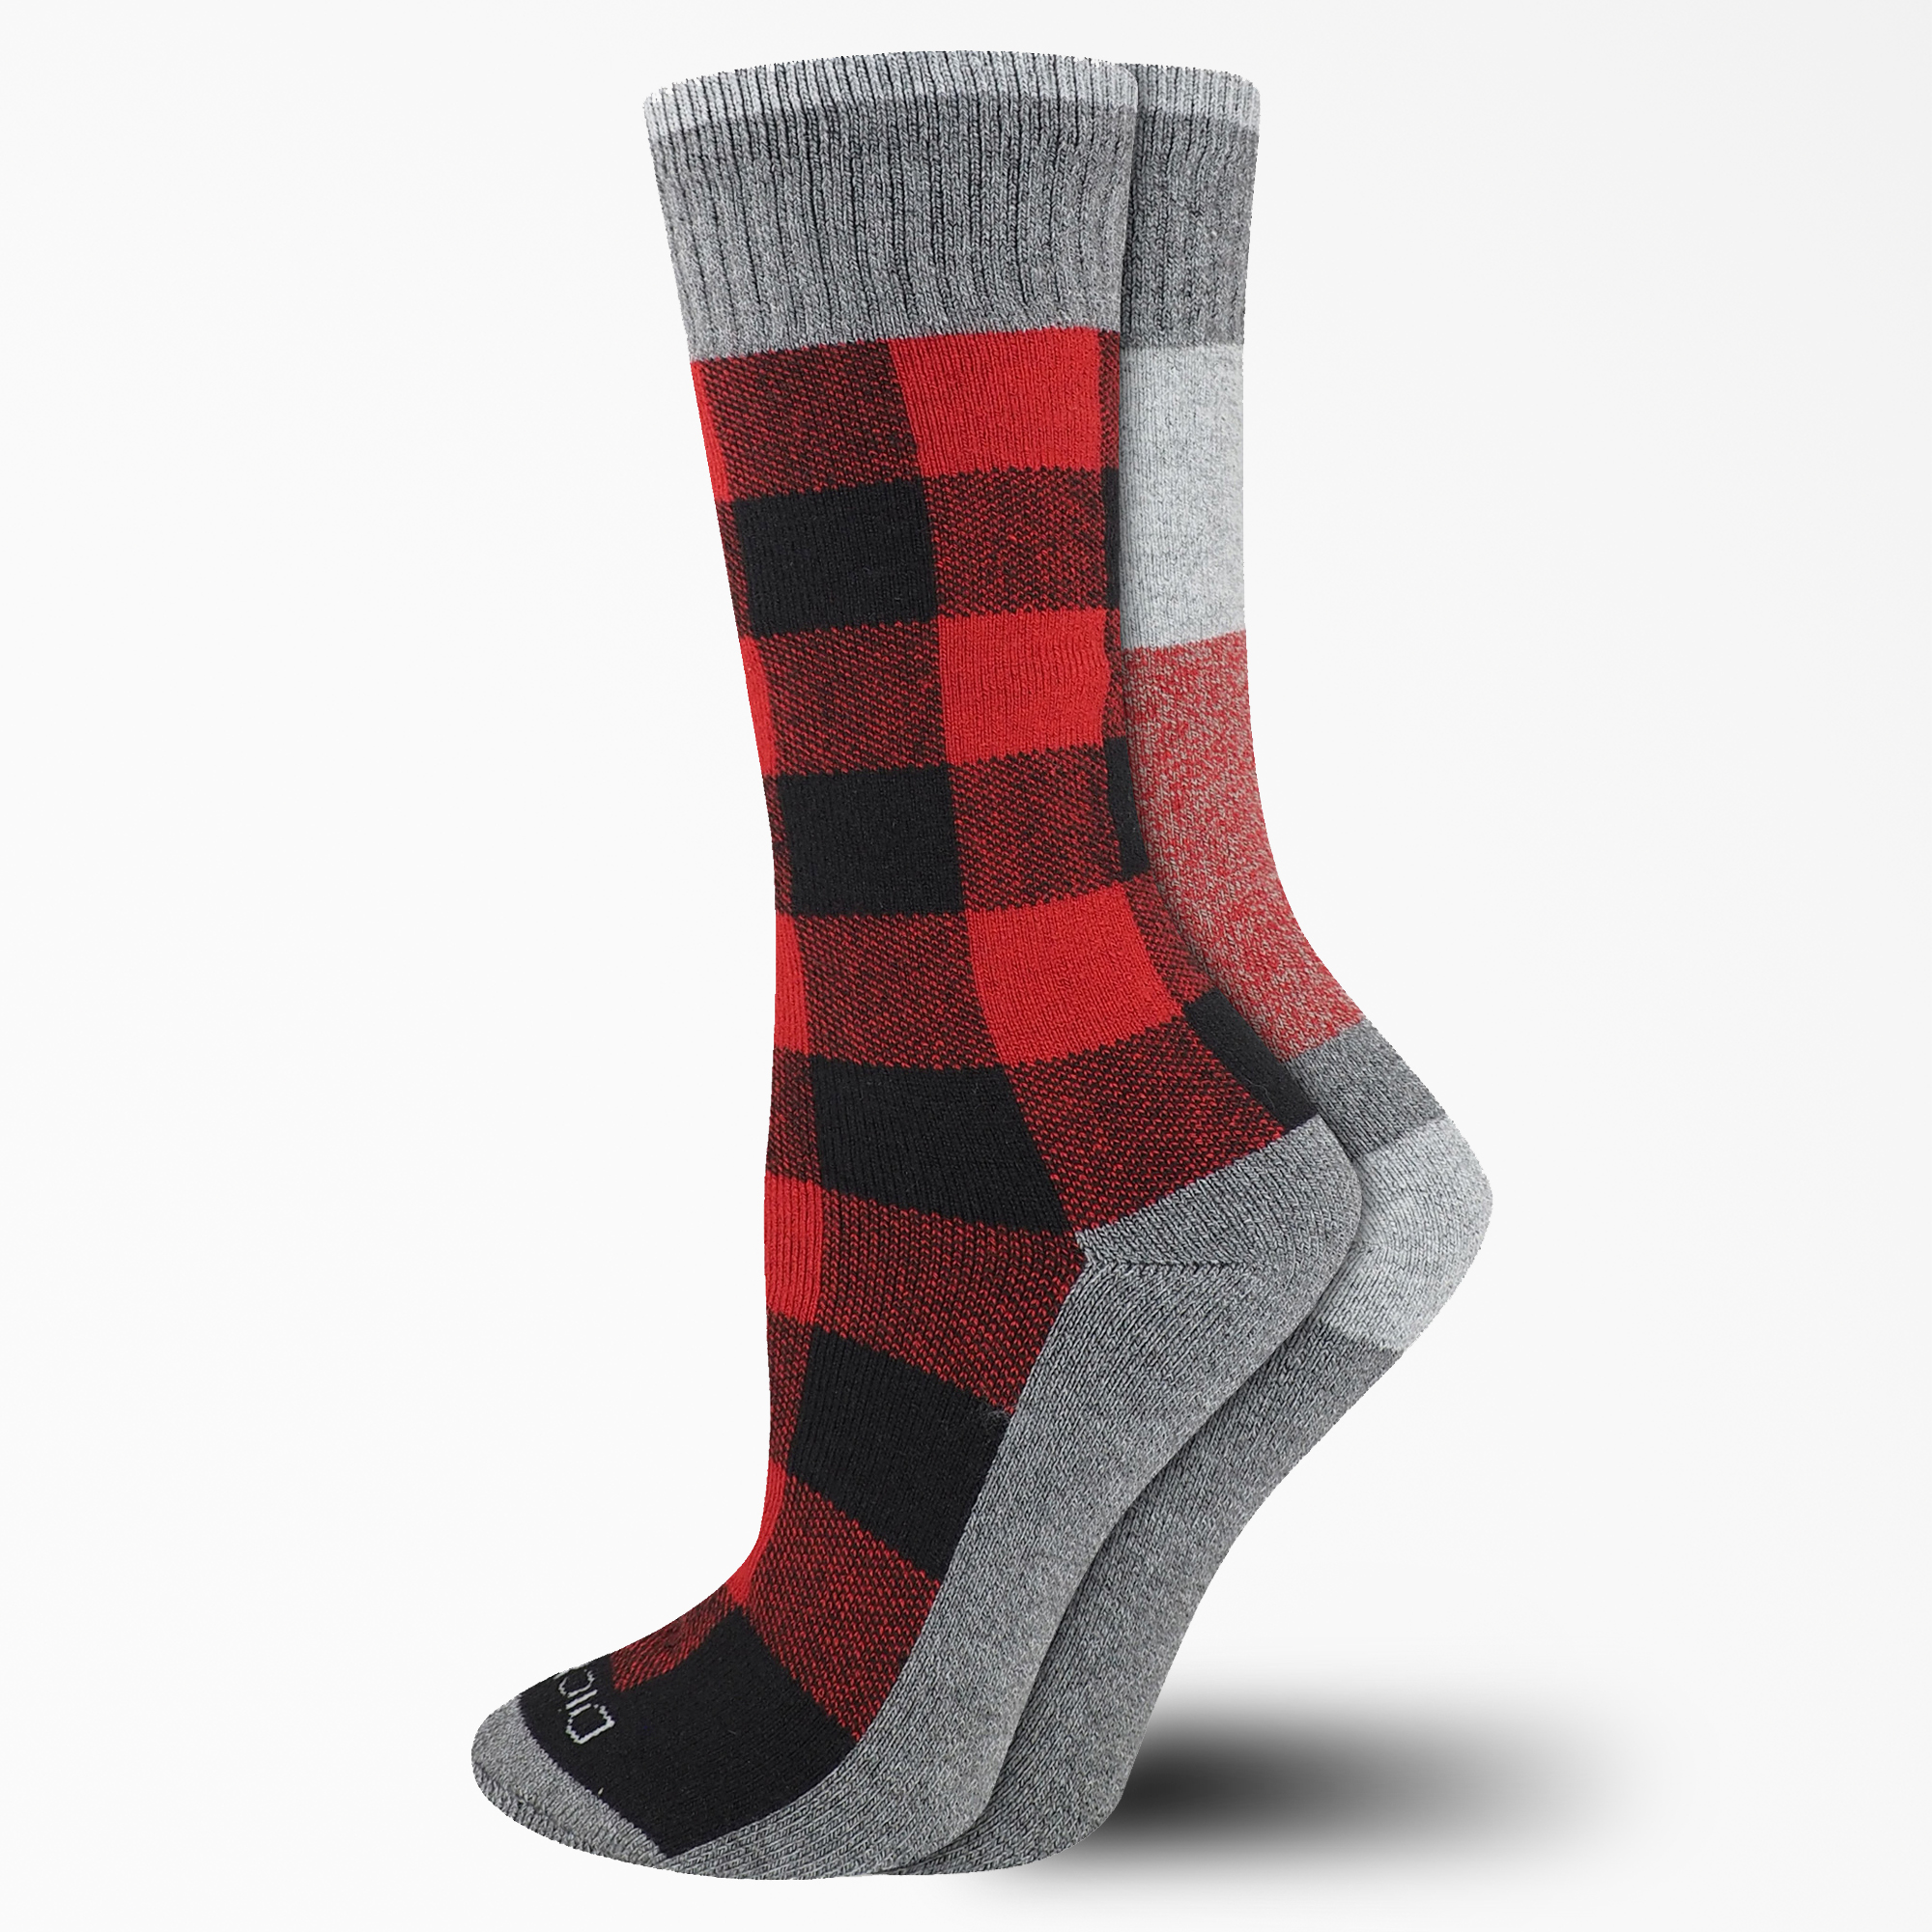 Women's Charcoal Fiber Thermal Crew Socks, 2-Pack - Red Plaid (PRD)